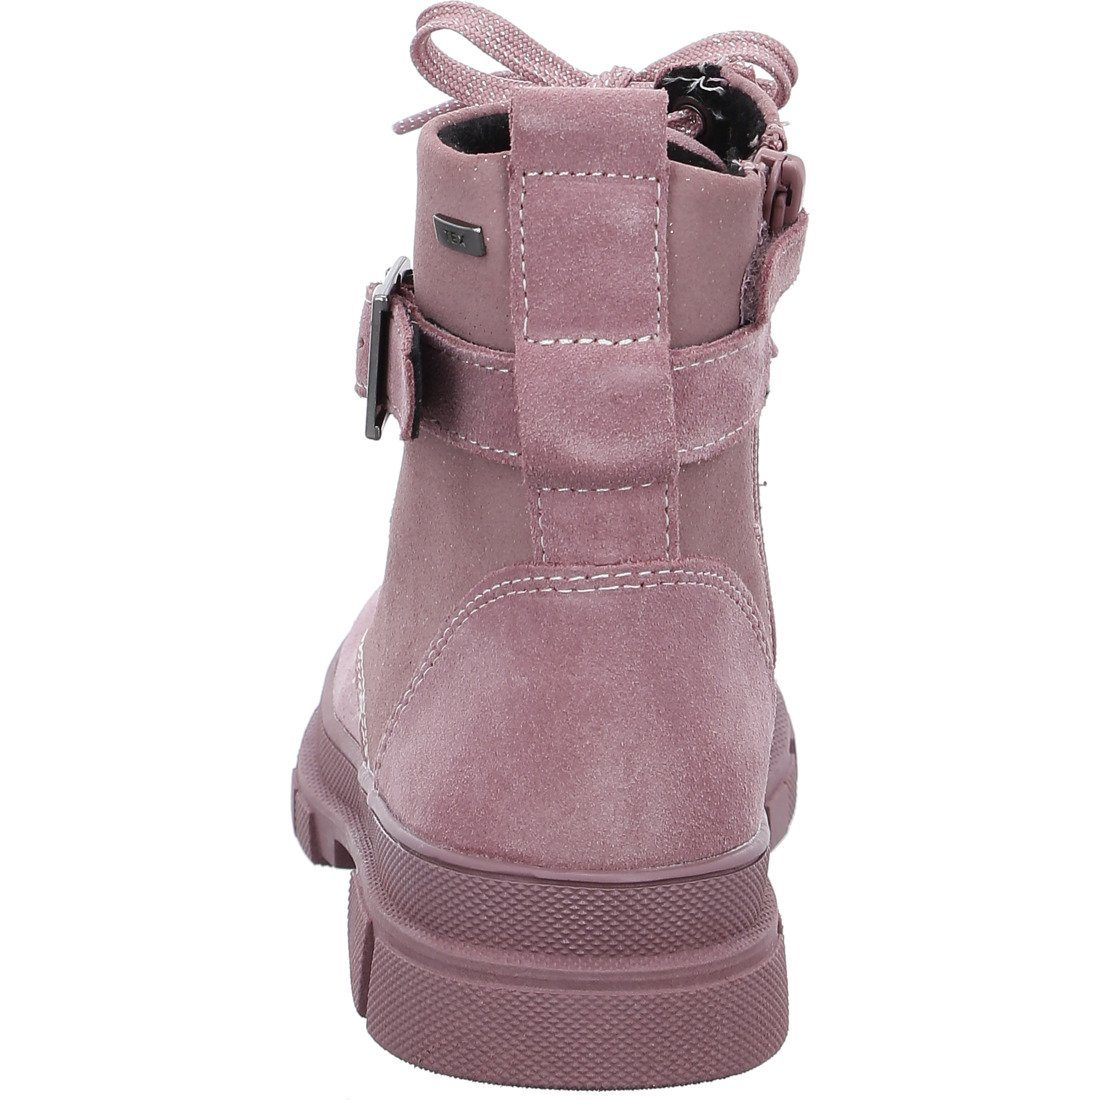 Lurchi Lurchi Schuhe, rosa - 046534 Stiefel Pina-Tex Stiefel Rauleder